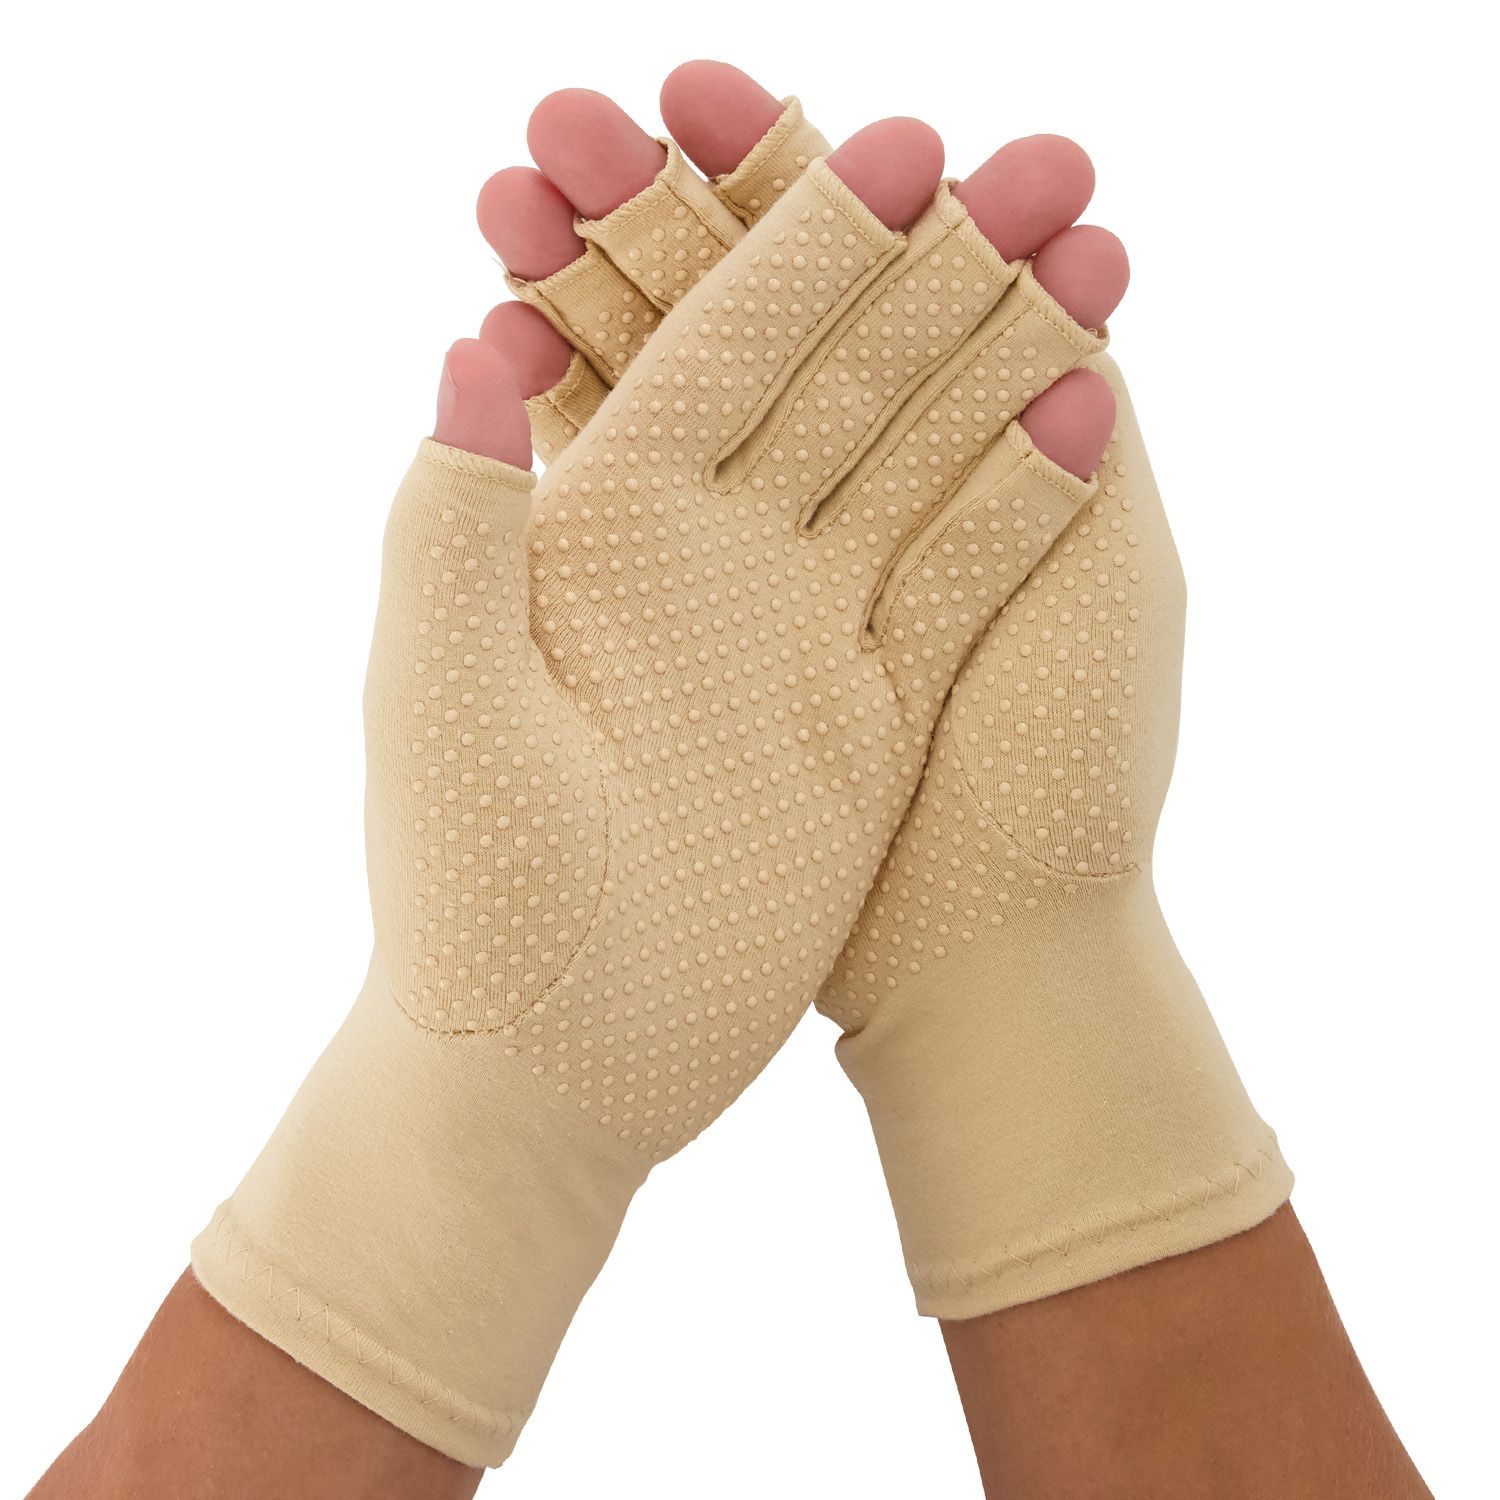 dunimed rheumatoid arthritis osteoarthritis gloves with anti-slip layer product explanation